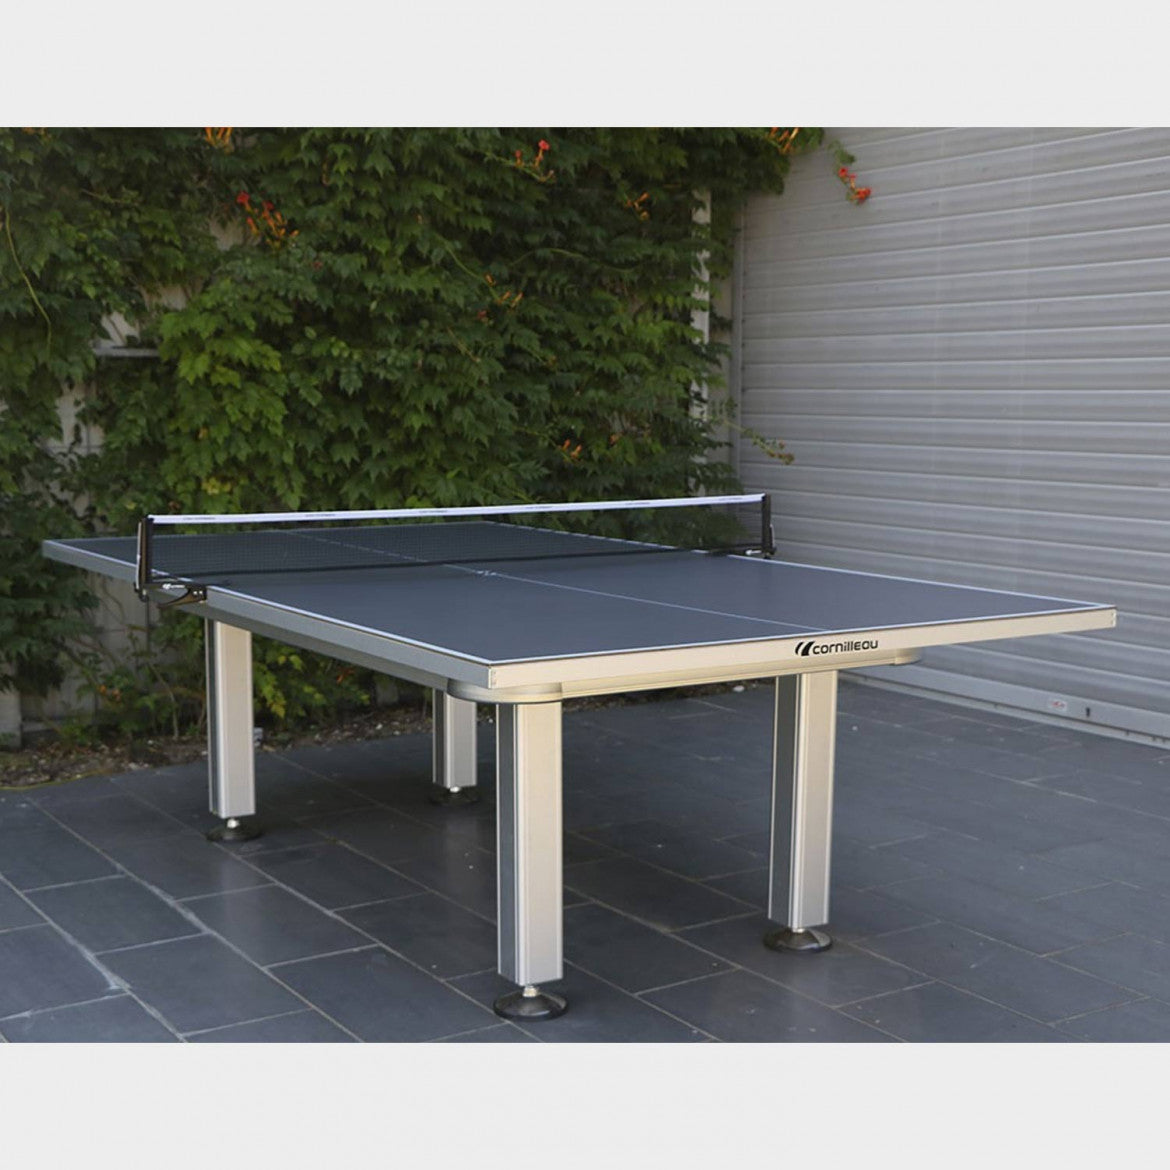 Cornilleau Outdoor Table Tennis Tops